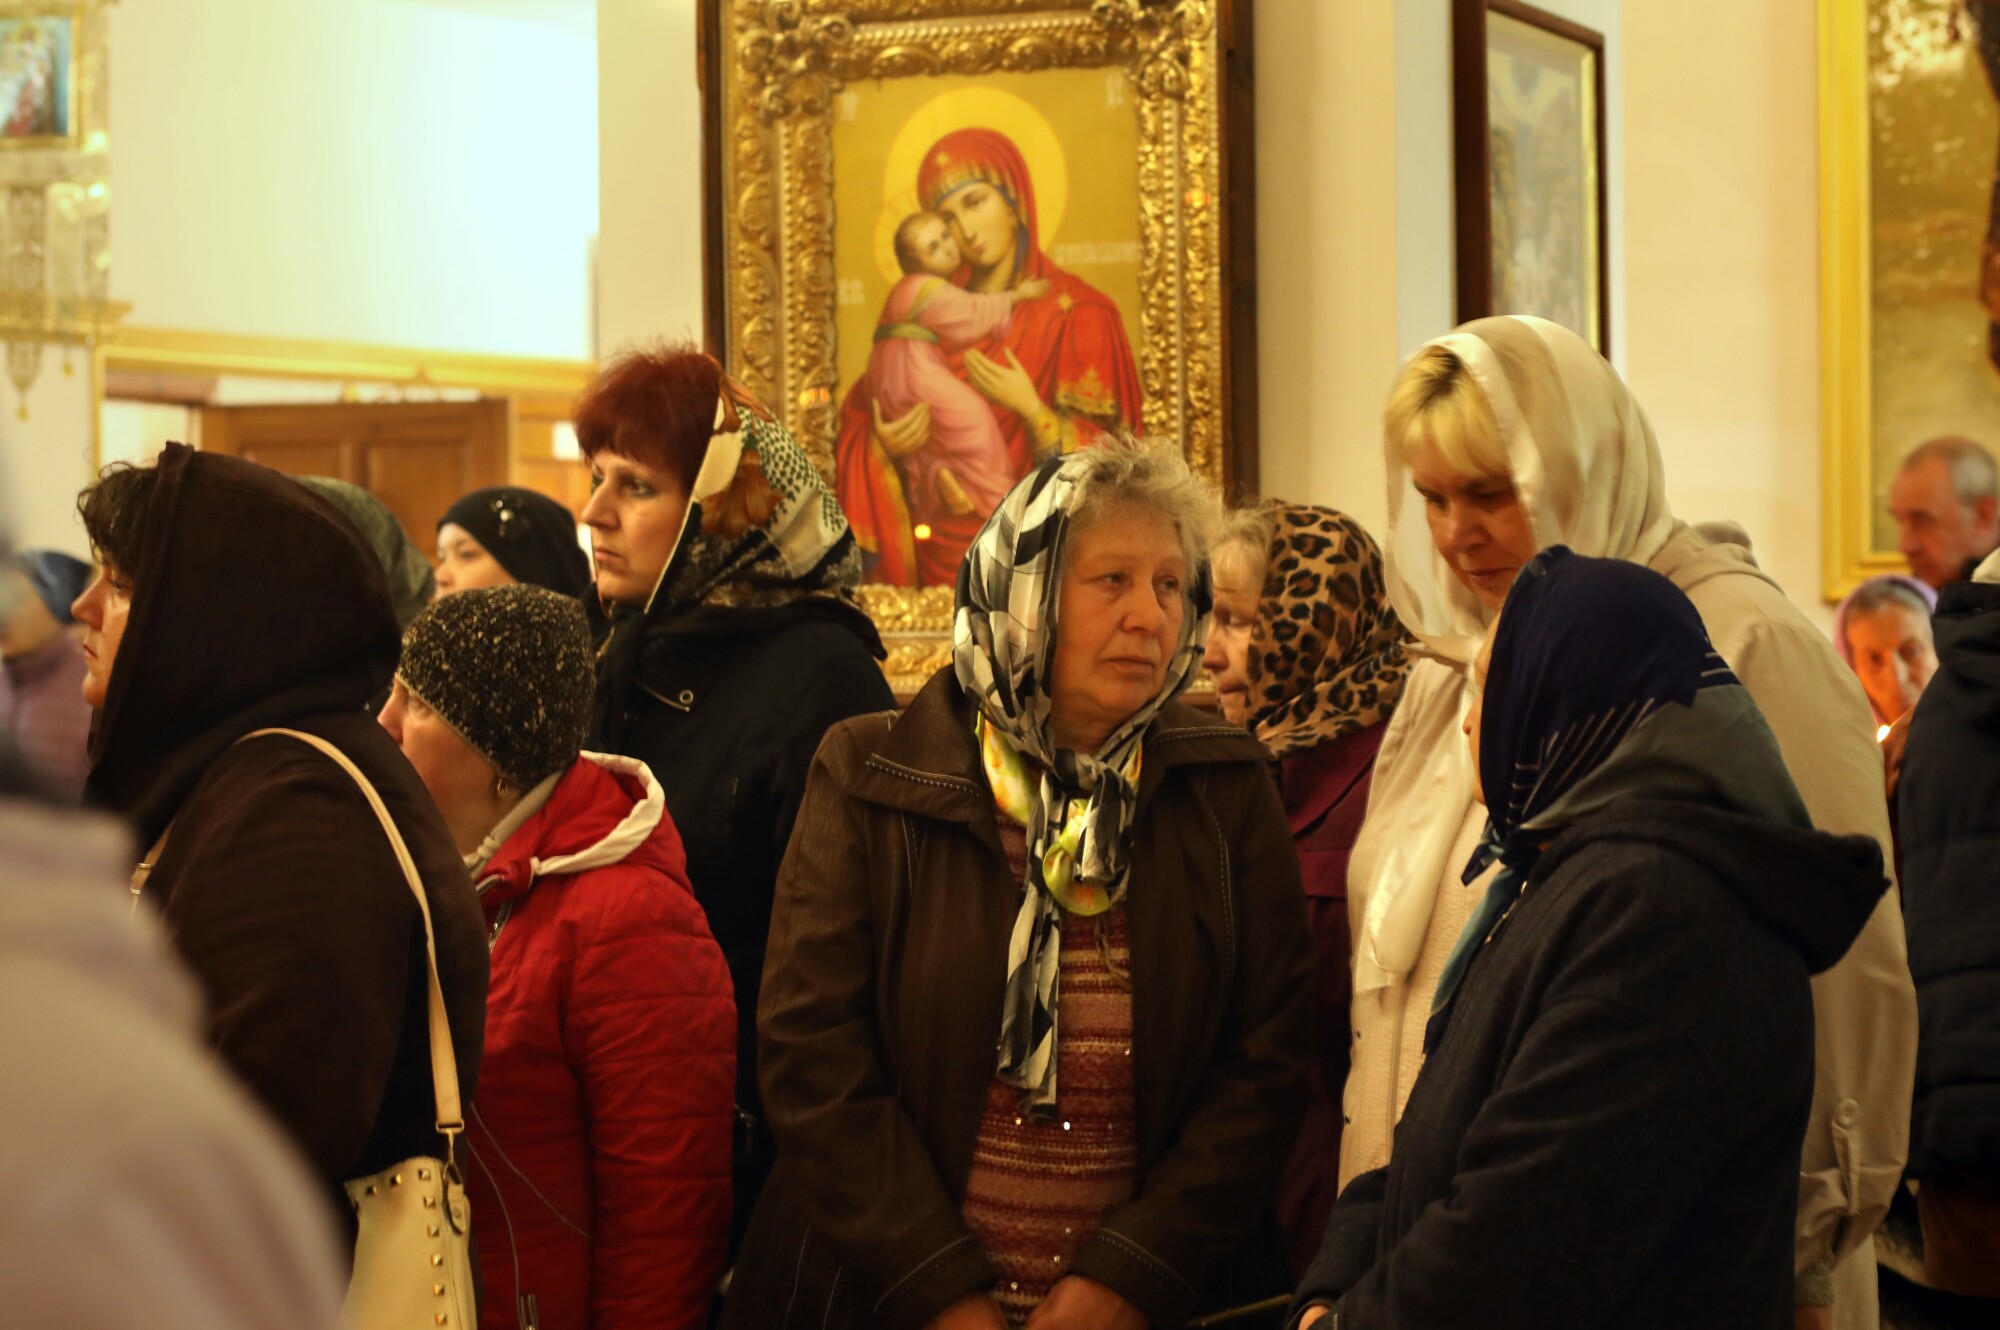 People gather inside a church in Ukraine.